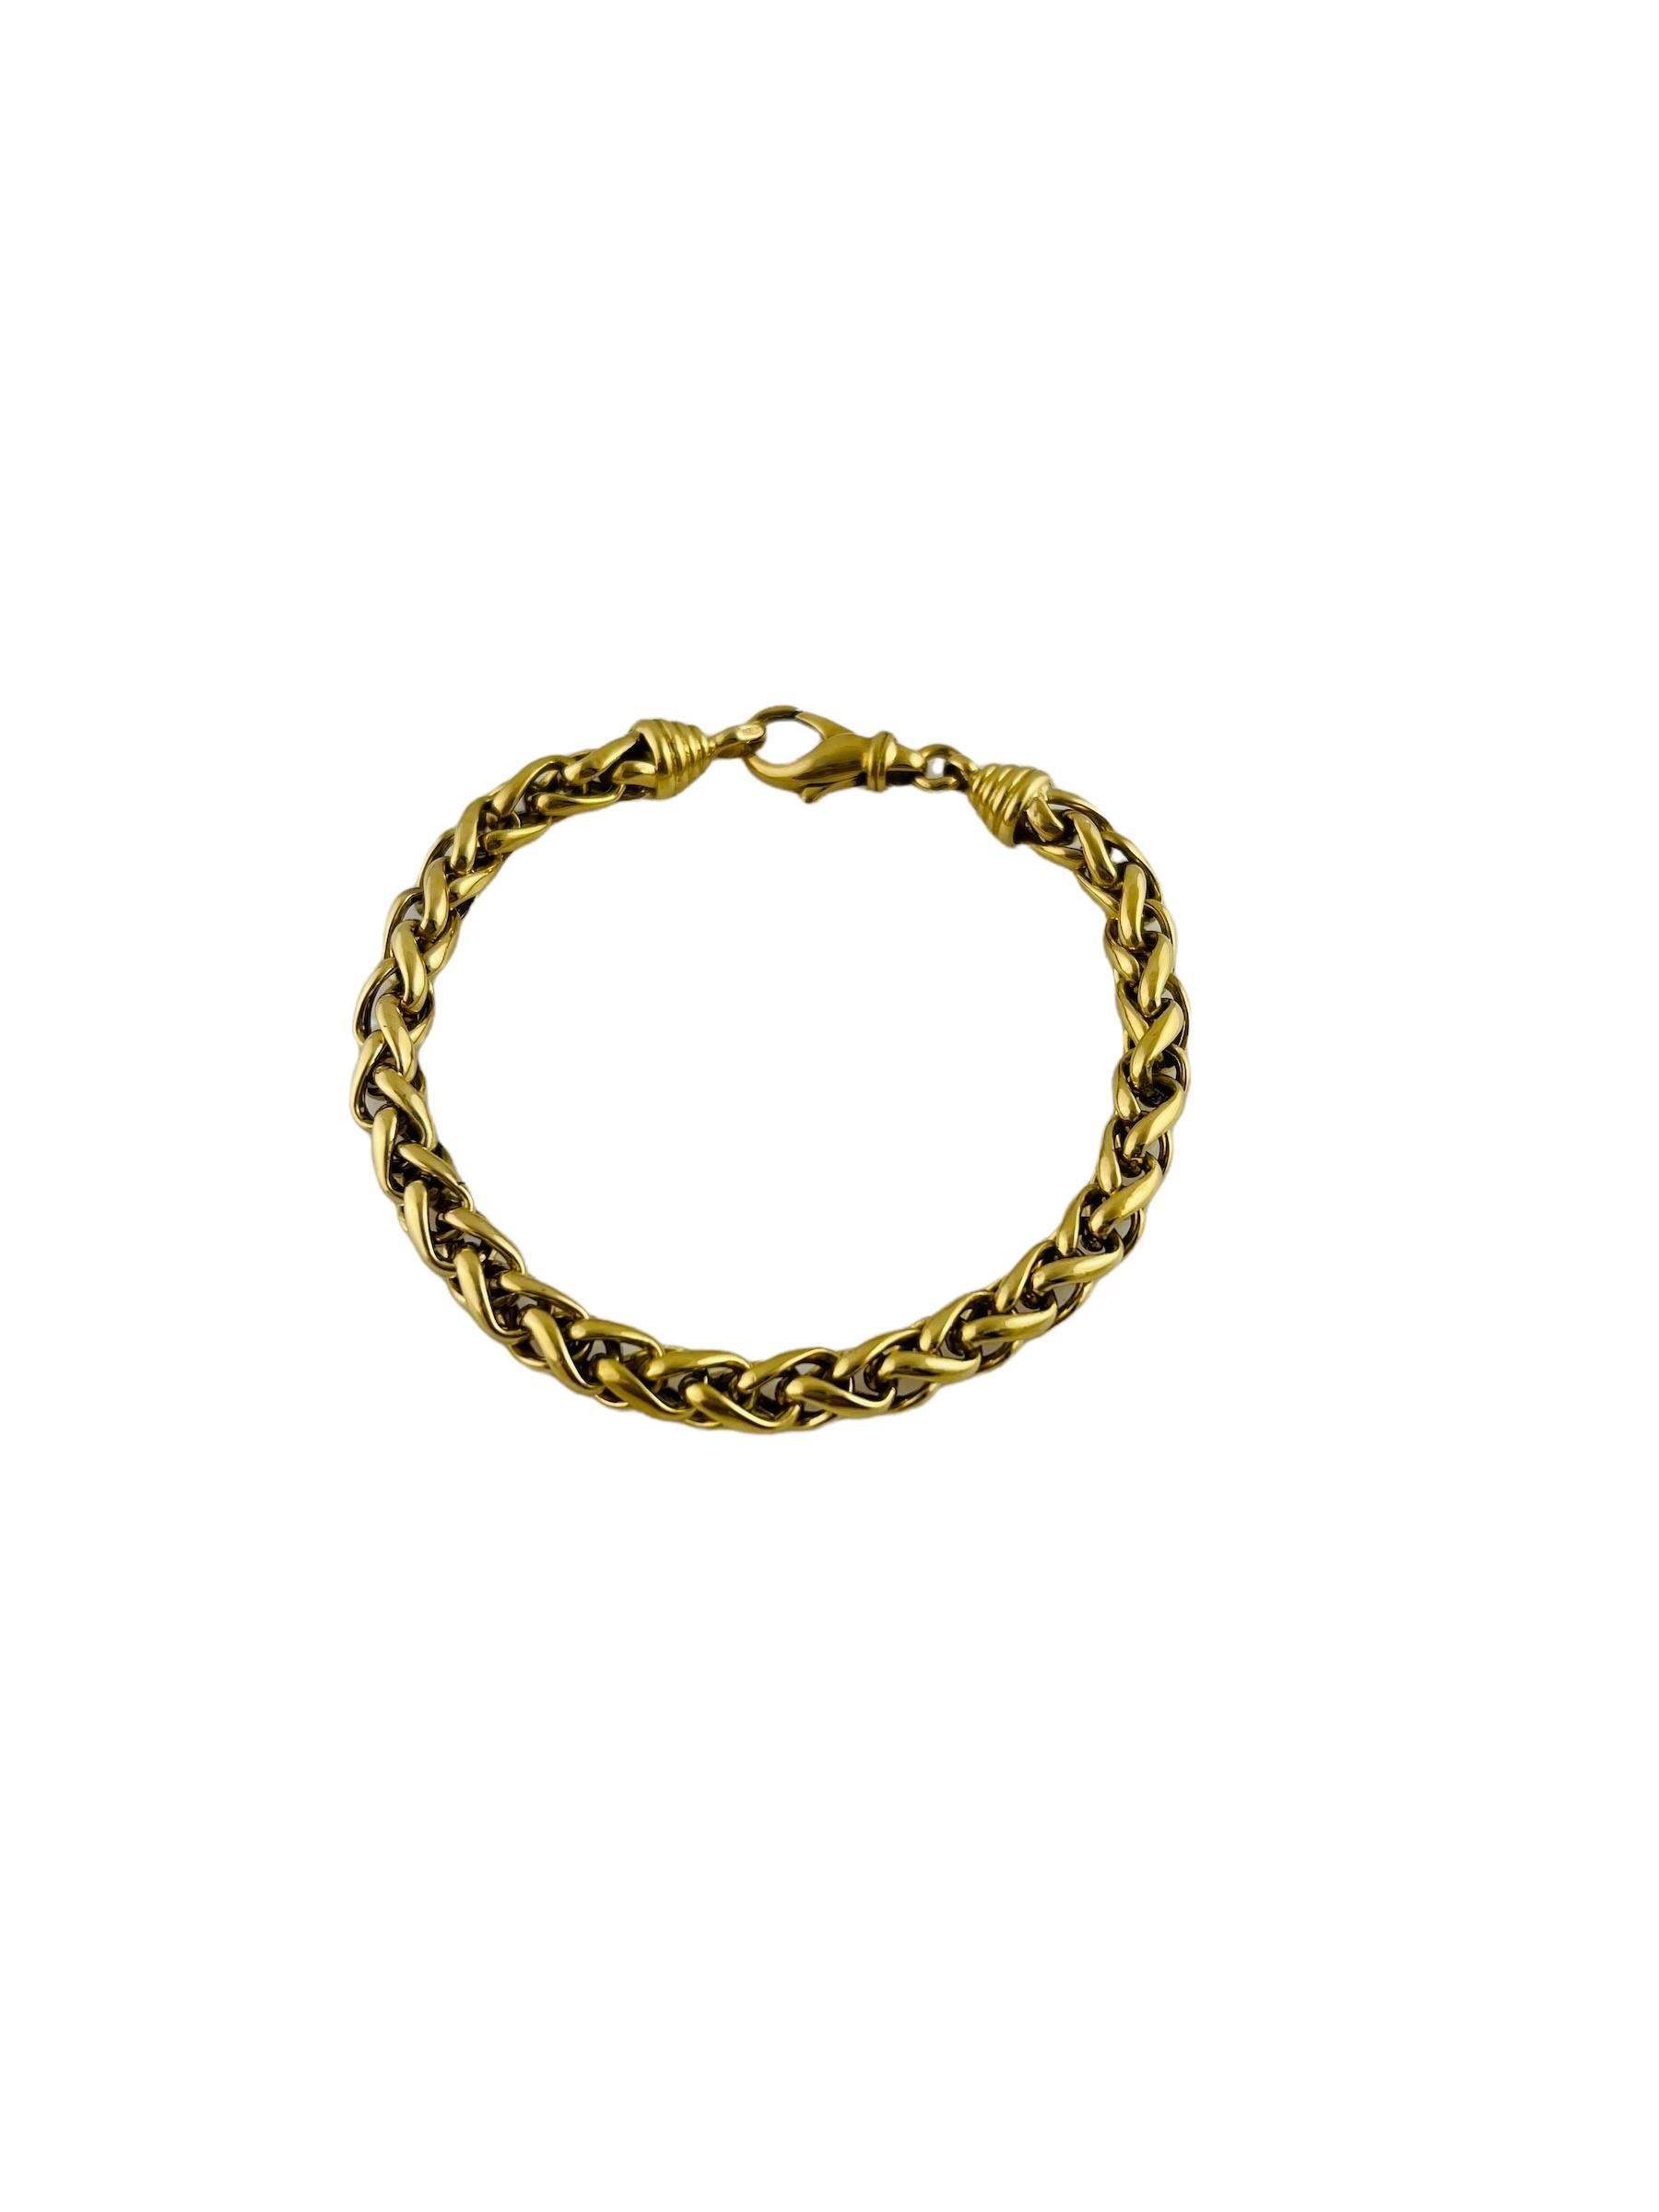 Tiffany & Co. 18K Yellow Gold Braided Wheat Bracelet

This Tiffany & Co. wheat chain bracelet is set in 18K yellow gold.

This bracelet is approx. 8